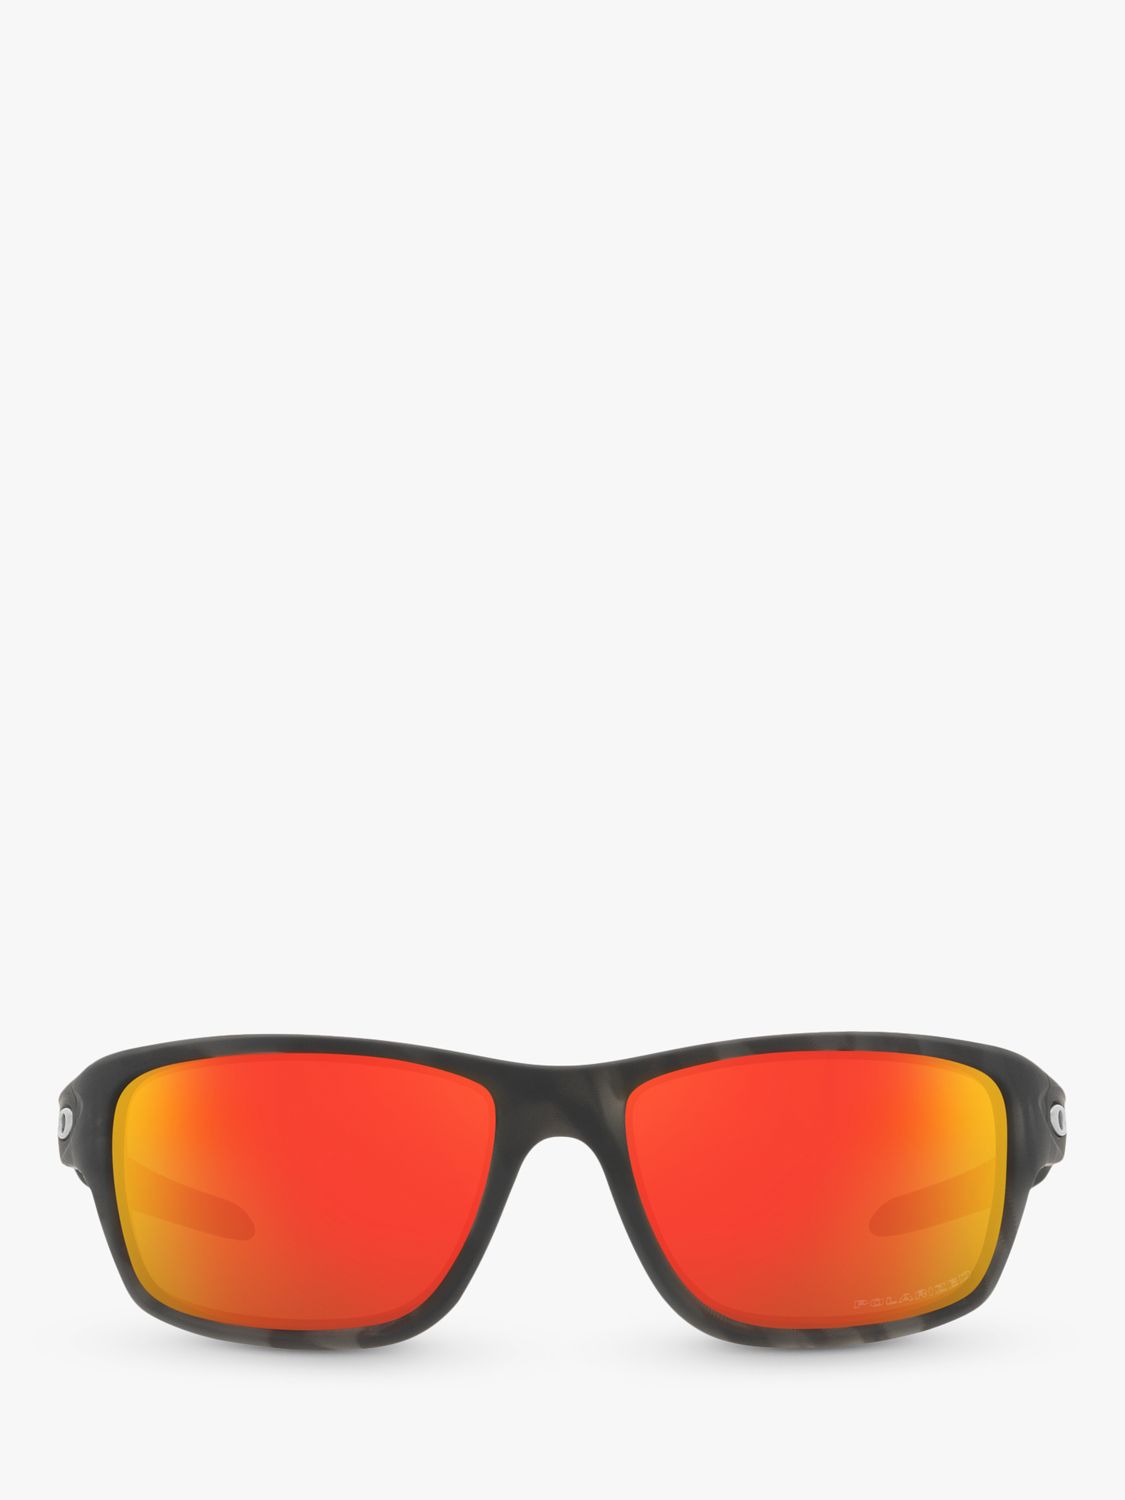 Oakley Canteen Sunglasses Matte Black Tortoise / Ruby Iridium Polarized